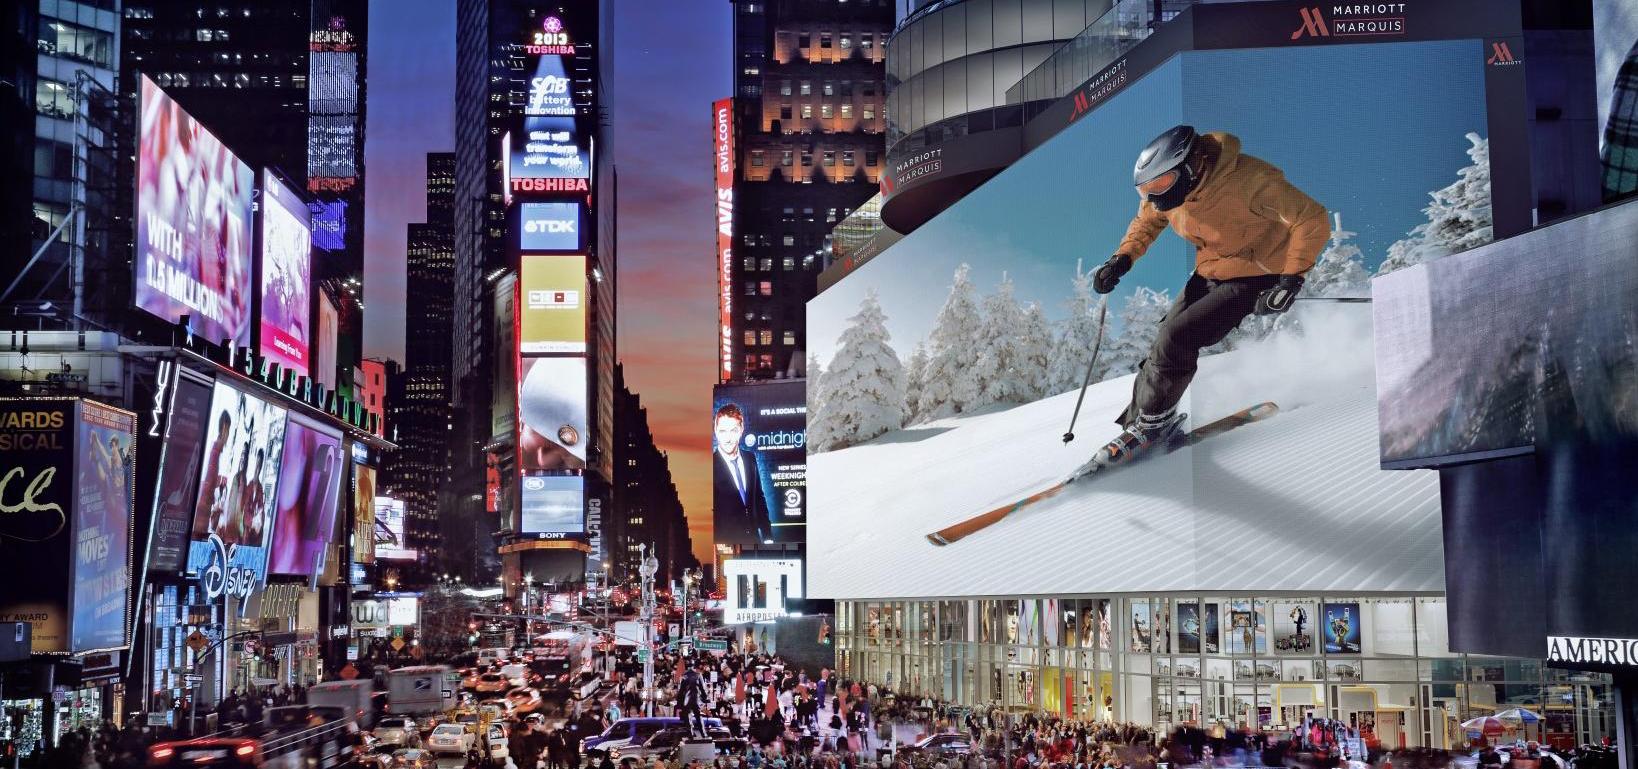 Gigantyczny billboard na Times Square Clear Channel Mediarun Com Biggest Billboard